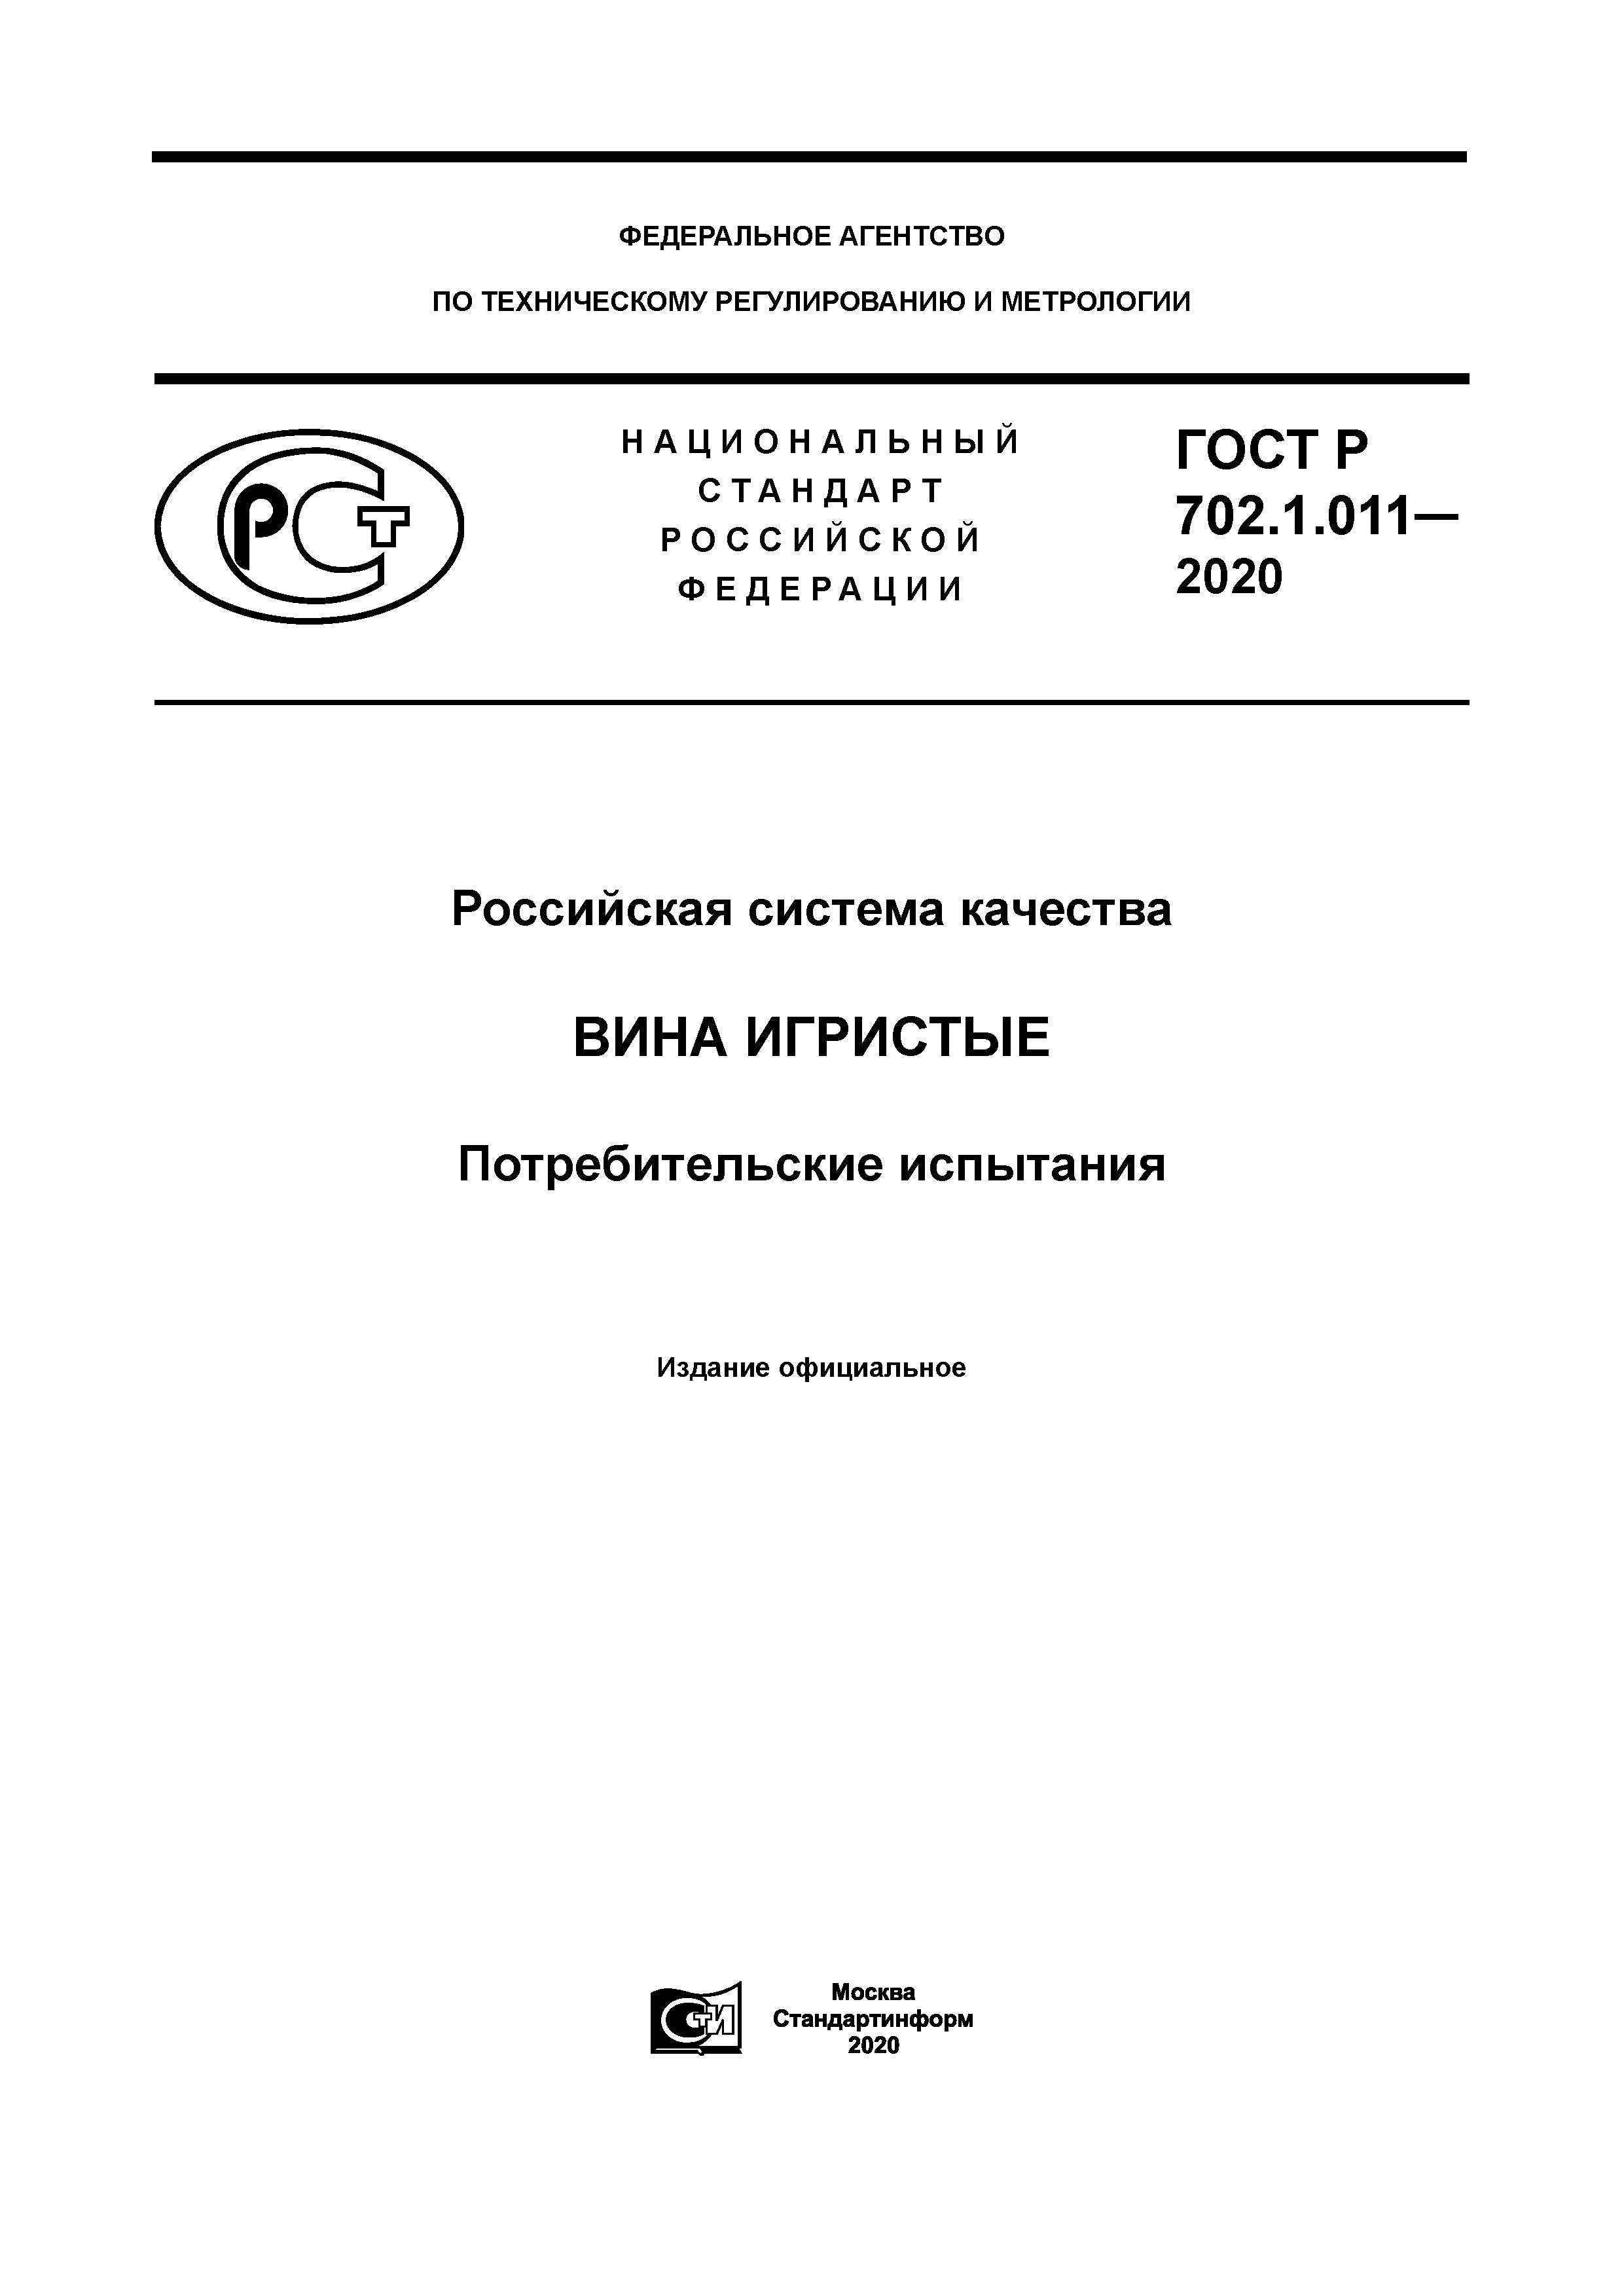 ГОСТ Р 702.1.011-2020